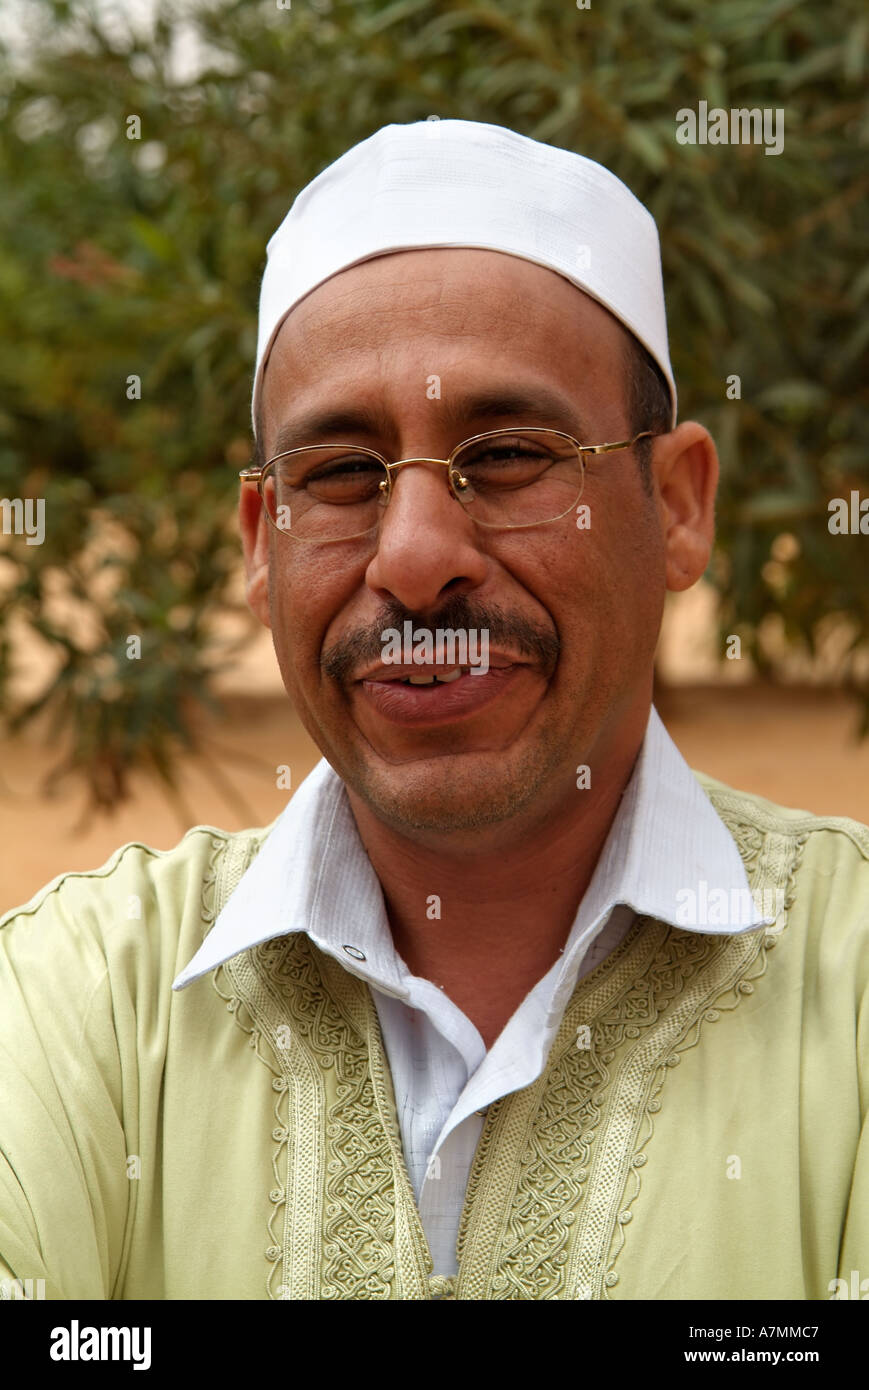 Libyan Man Hi Res Stock Photography And Images Alamy